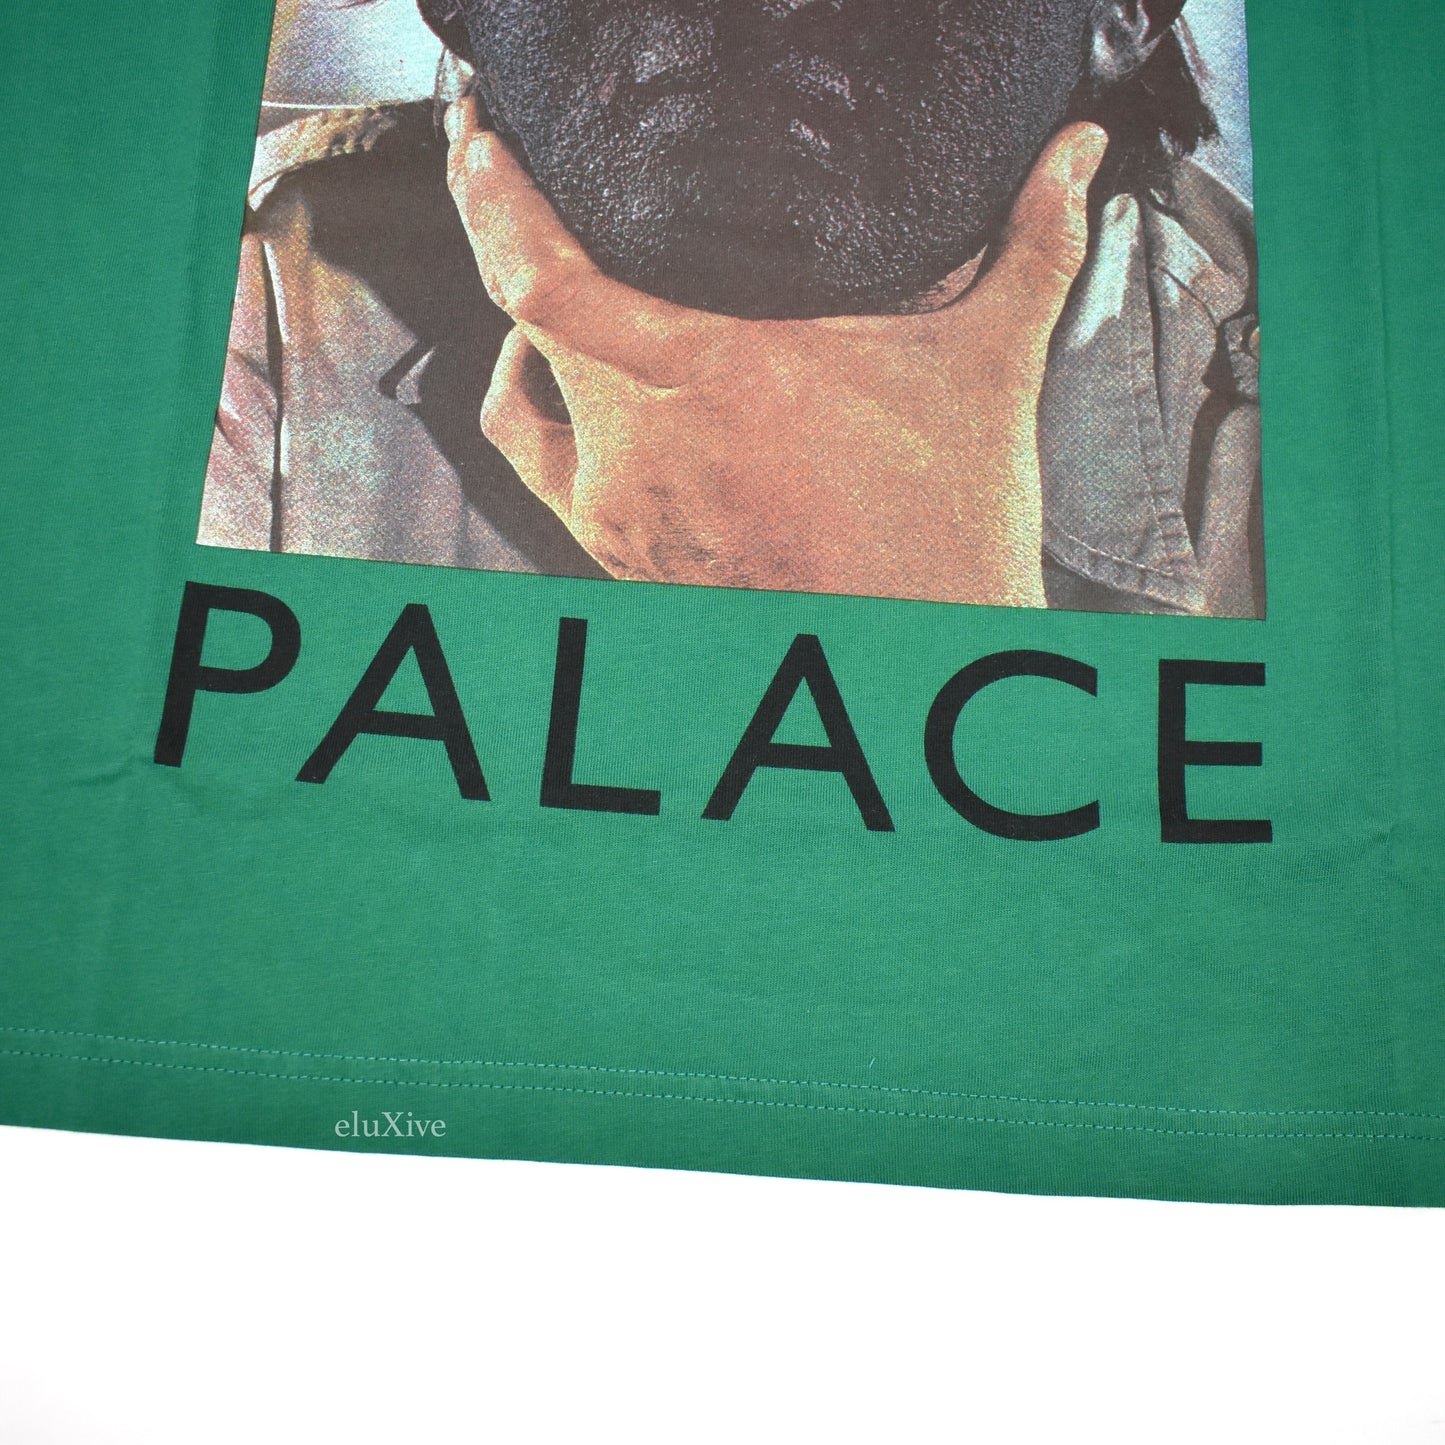 Palace - Nicked Logo T-Shirt (Green)